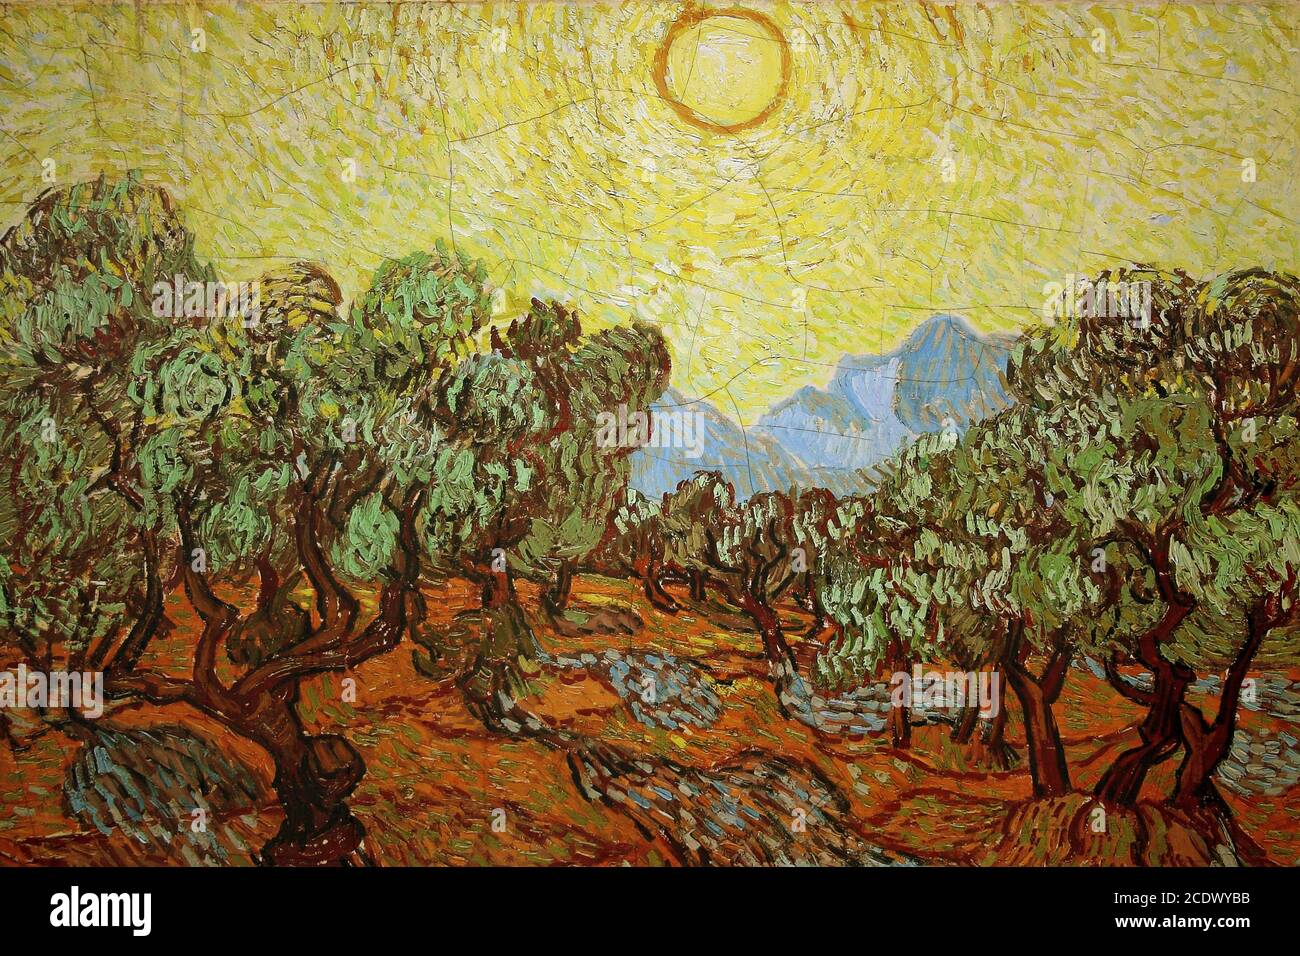 Van Gogh Olive grandissent avec le ciel jaune Banque D'Images